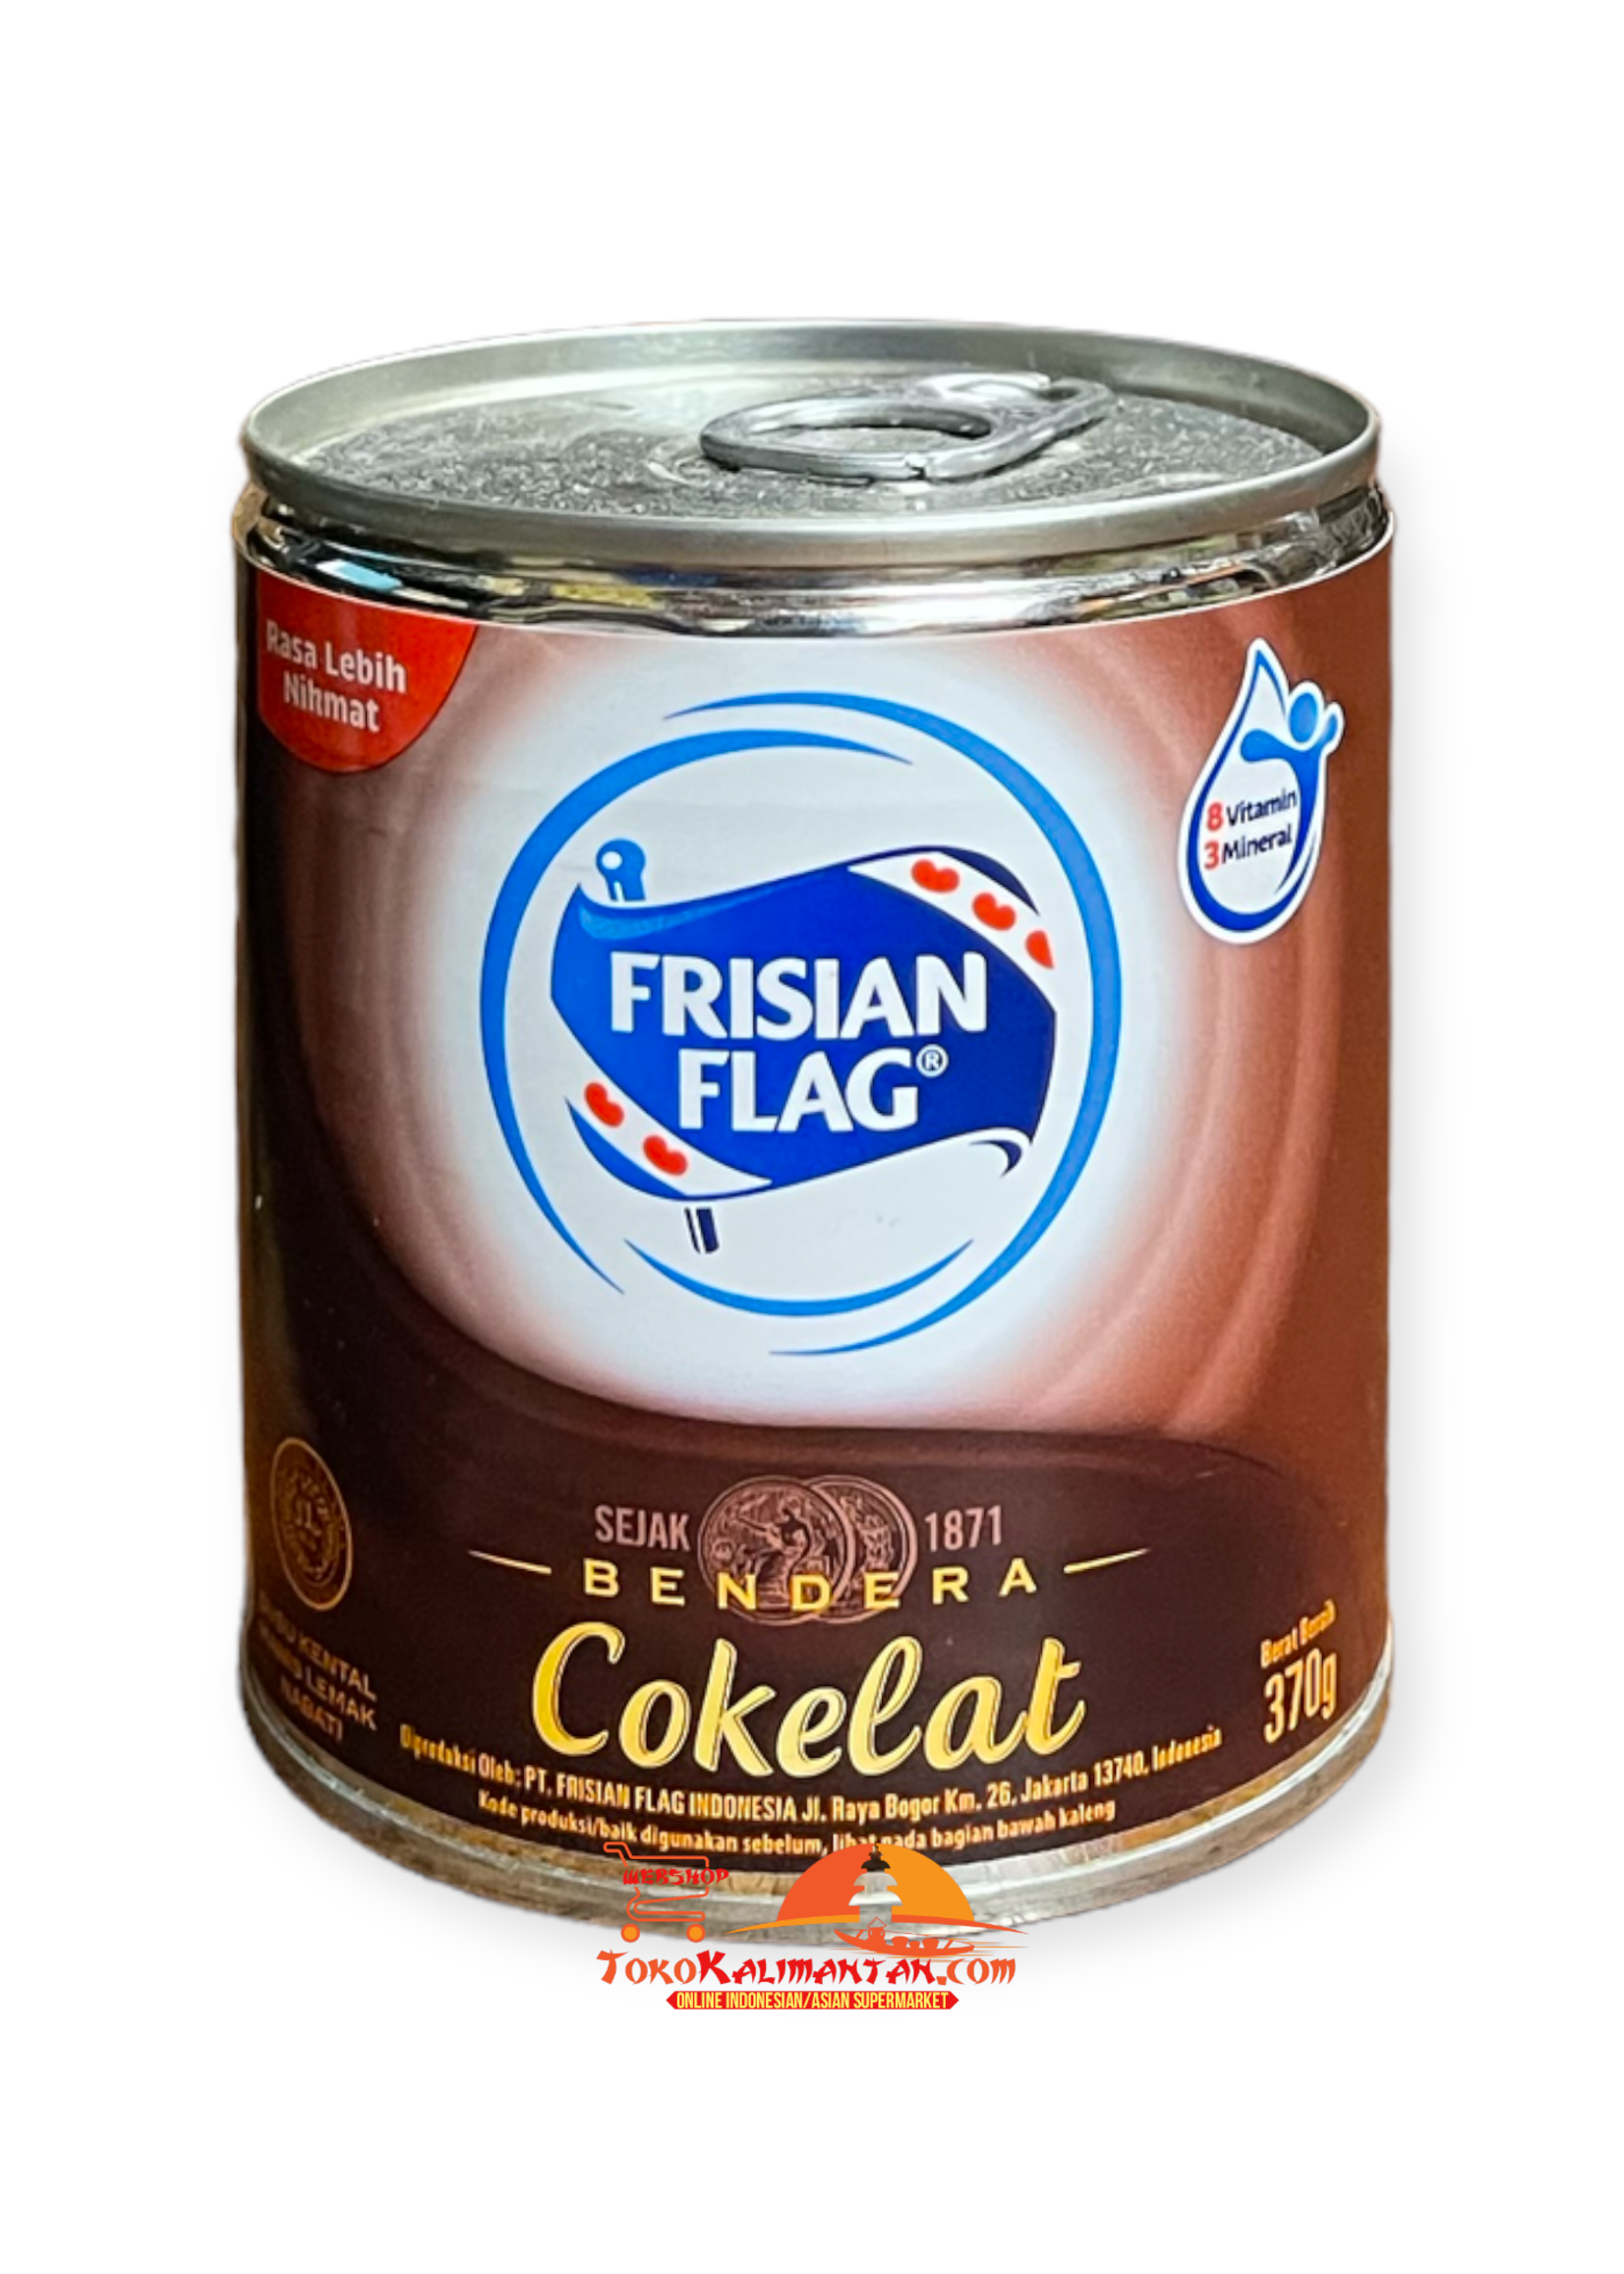 Frisian Flag Frisian Flag vesie indonesia  - Bendera Rasa Coklat kaleng 370 g